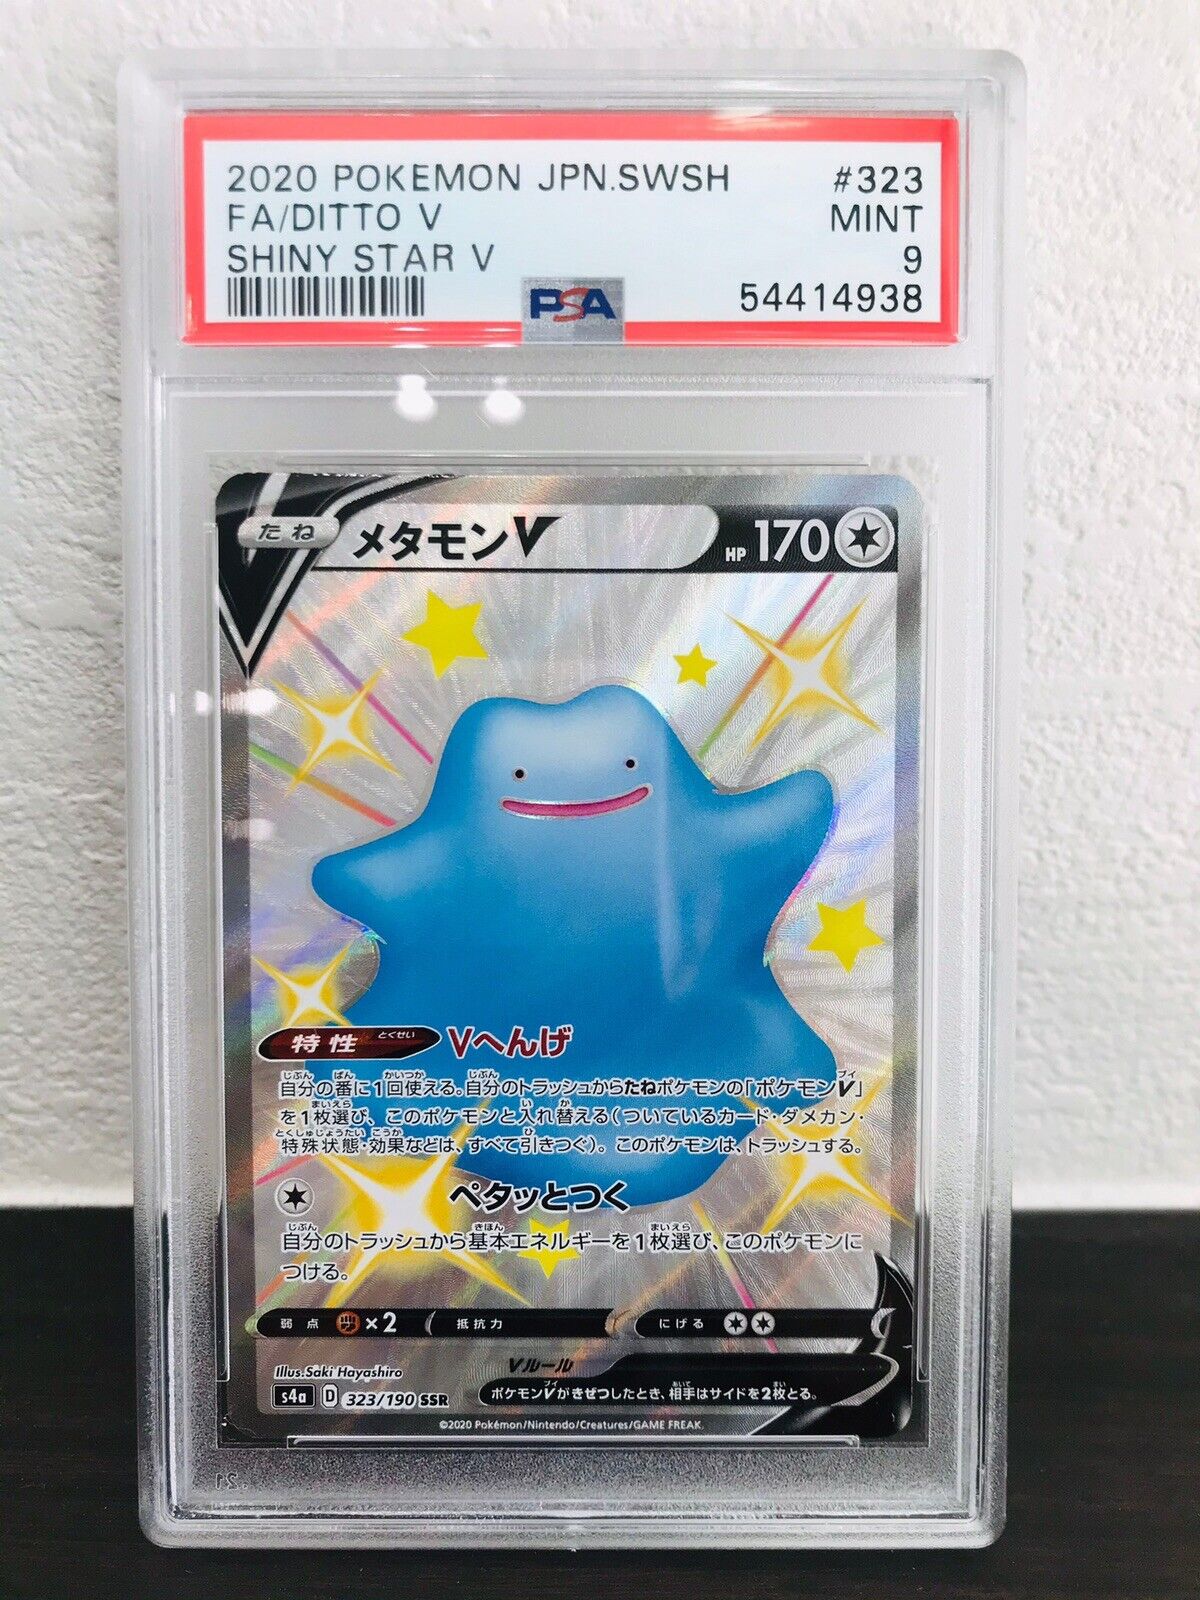 PSA 9 MINT Pokemon card Japanese 323/190 DITTO V SSR Shiny Star V 2020